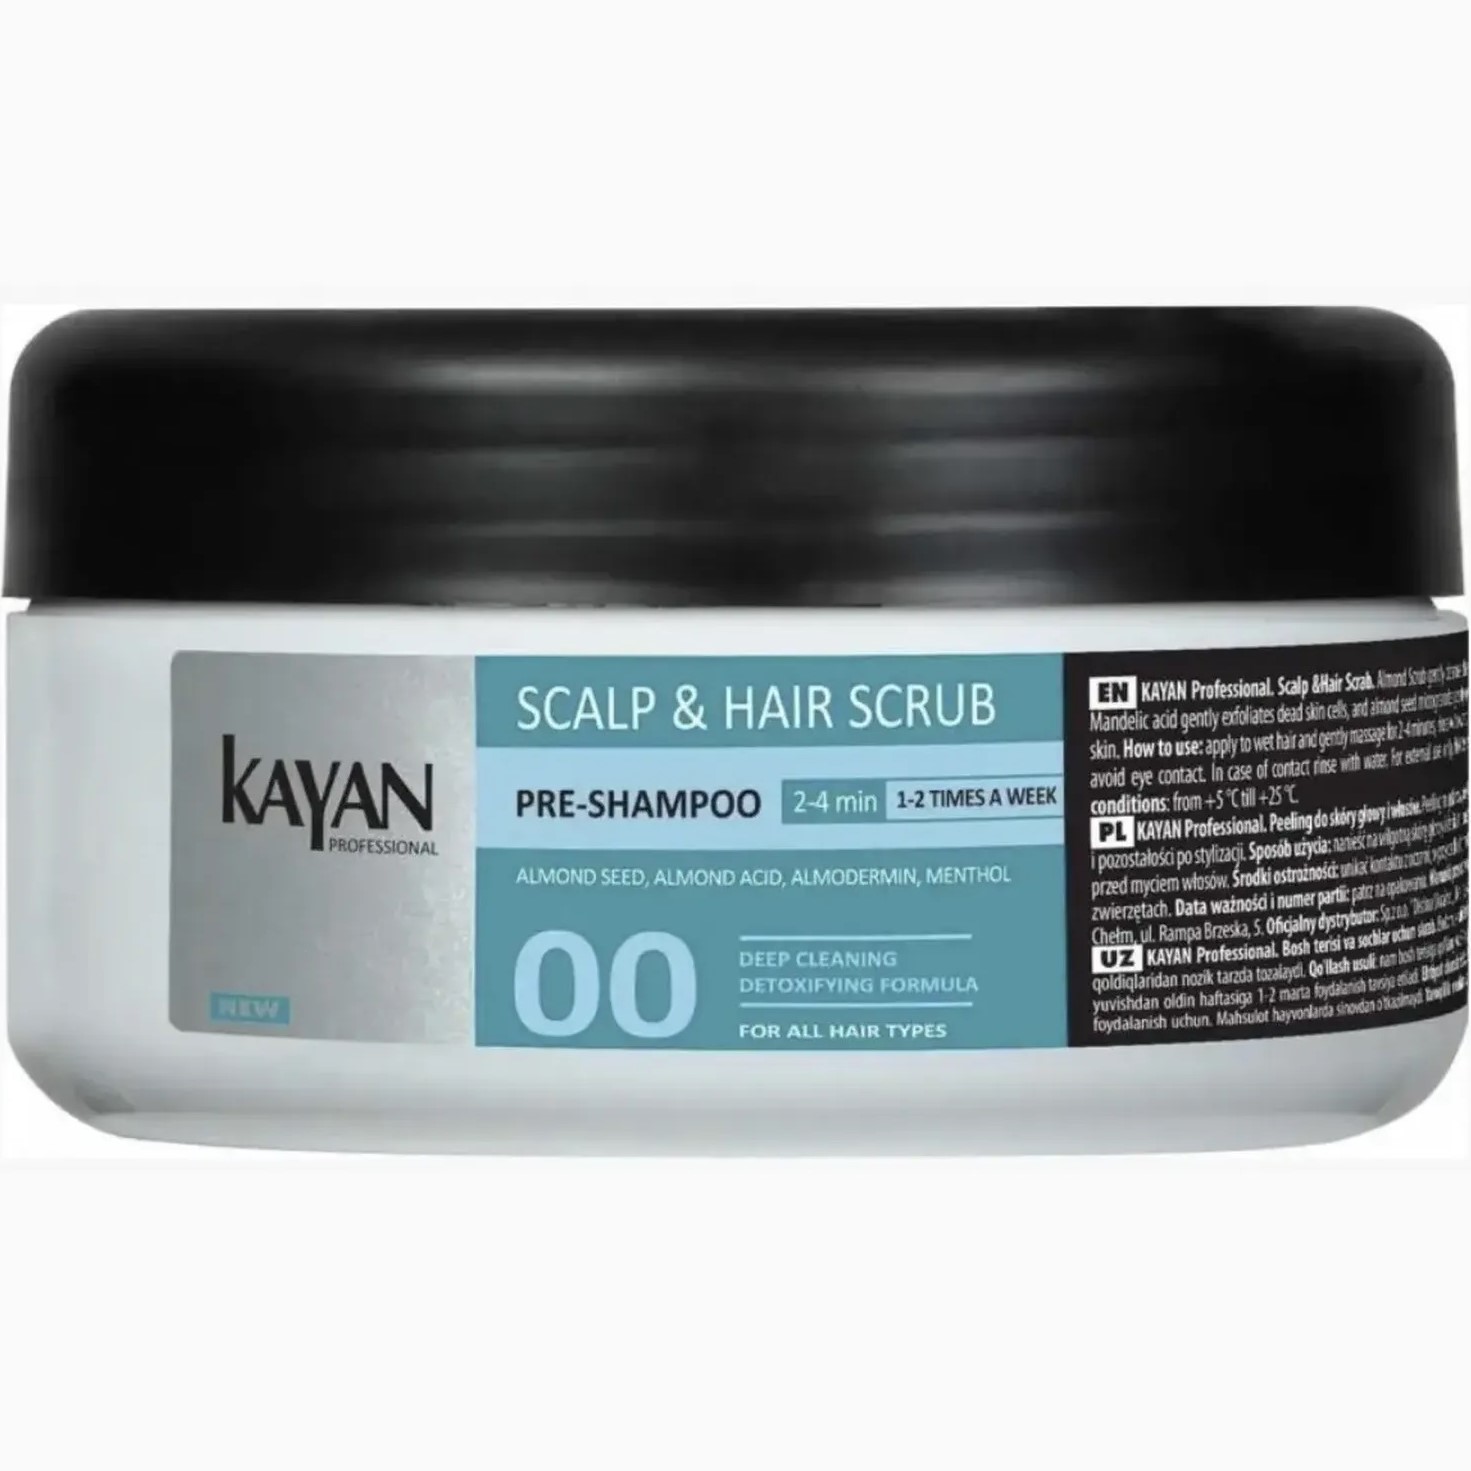 Скраб для кожи головы и волос Kayan Professional Scalp & Hair Scrub, 300 мл - фото 1